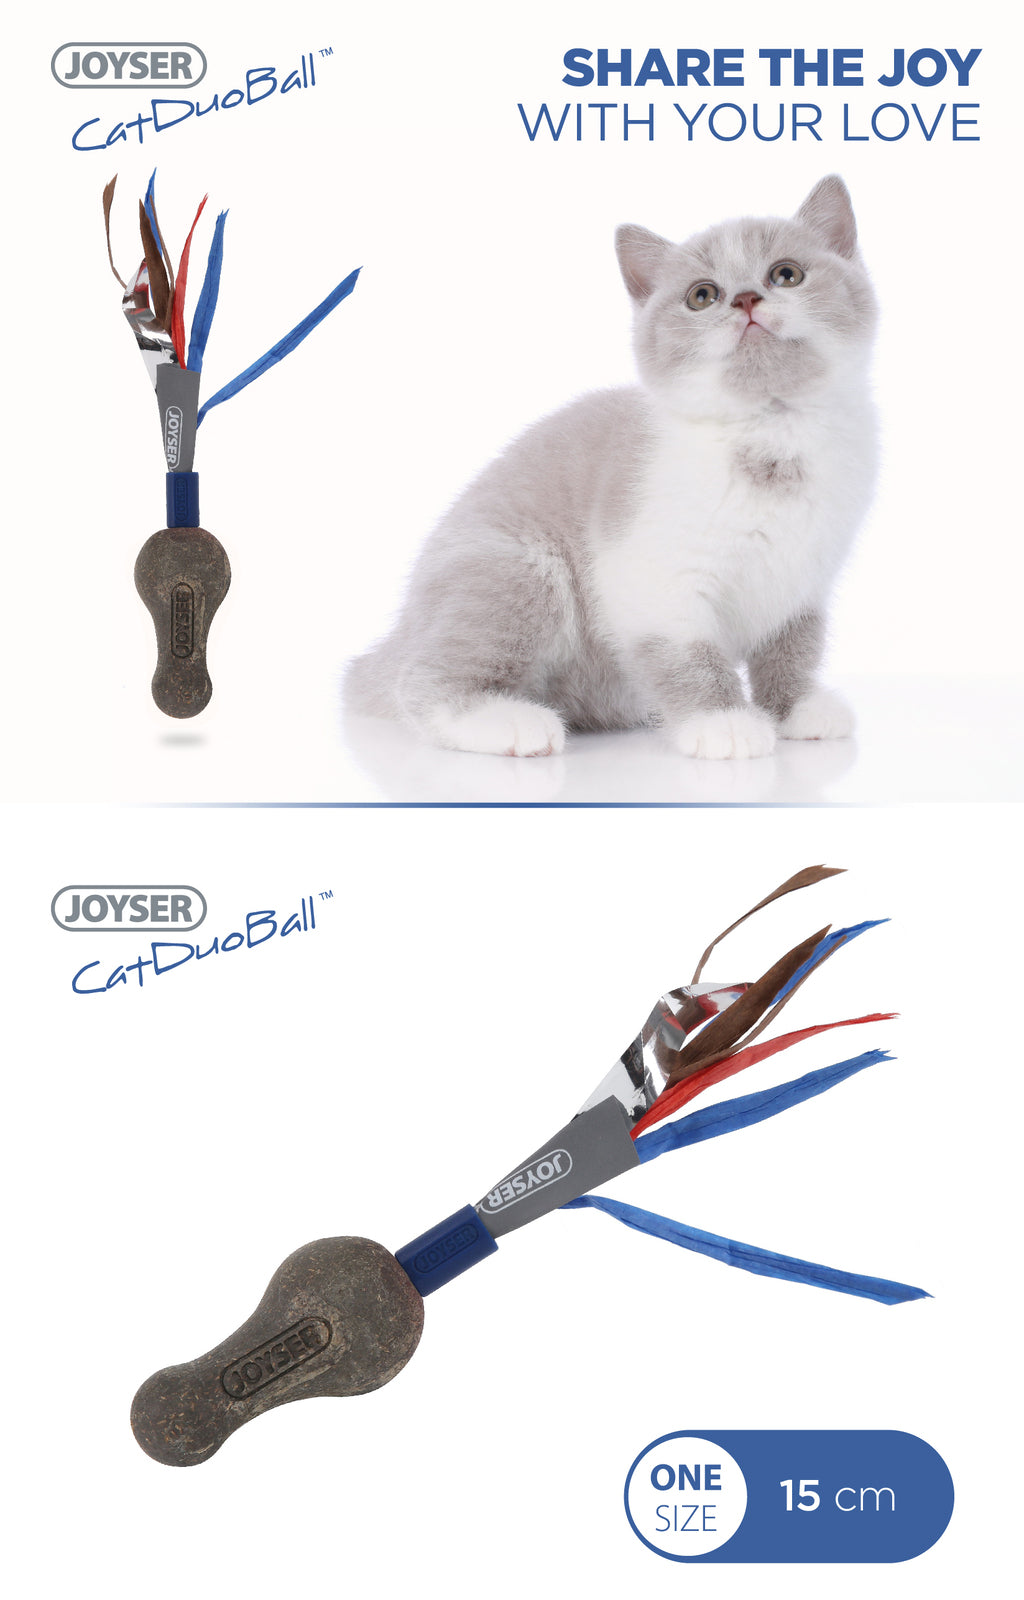 JOYSER Cat Toys Catnip Duoball With Crinkle Paper